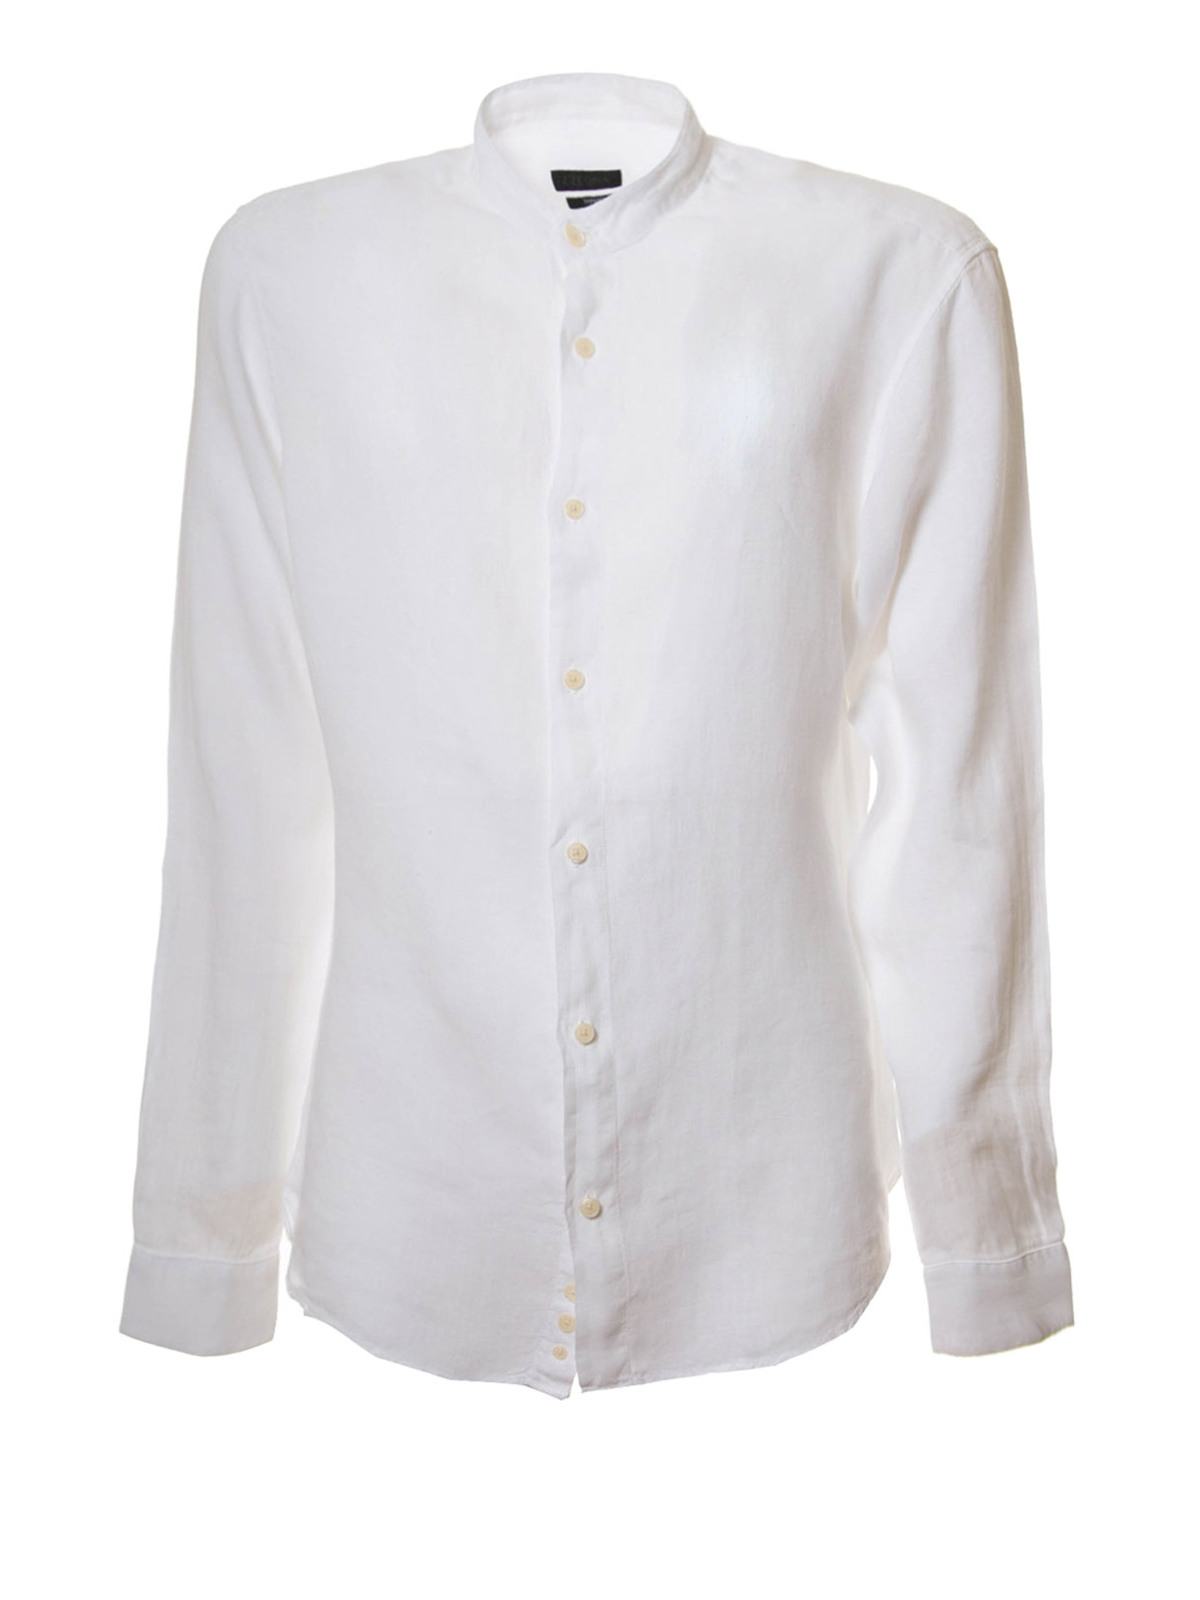 Shirts Z Zegna - Guru collar linen shirt - ZZ550VI220N00 | iKRIX.com